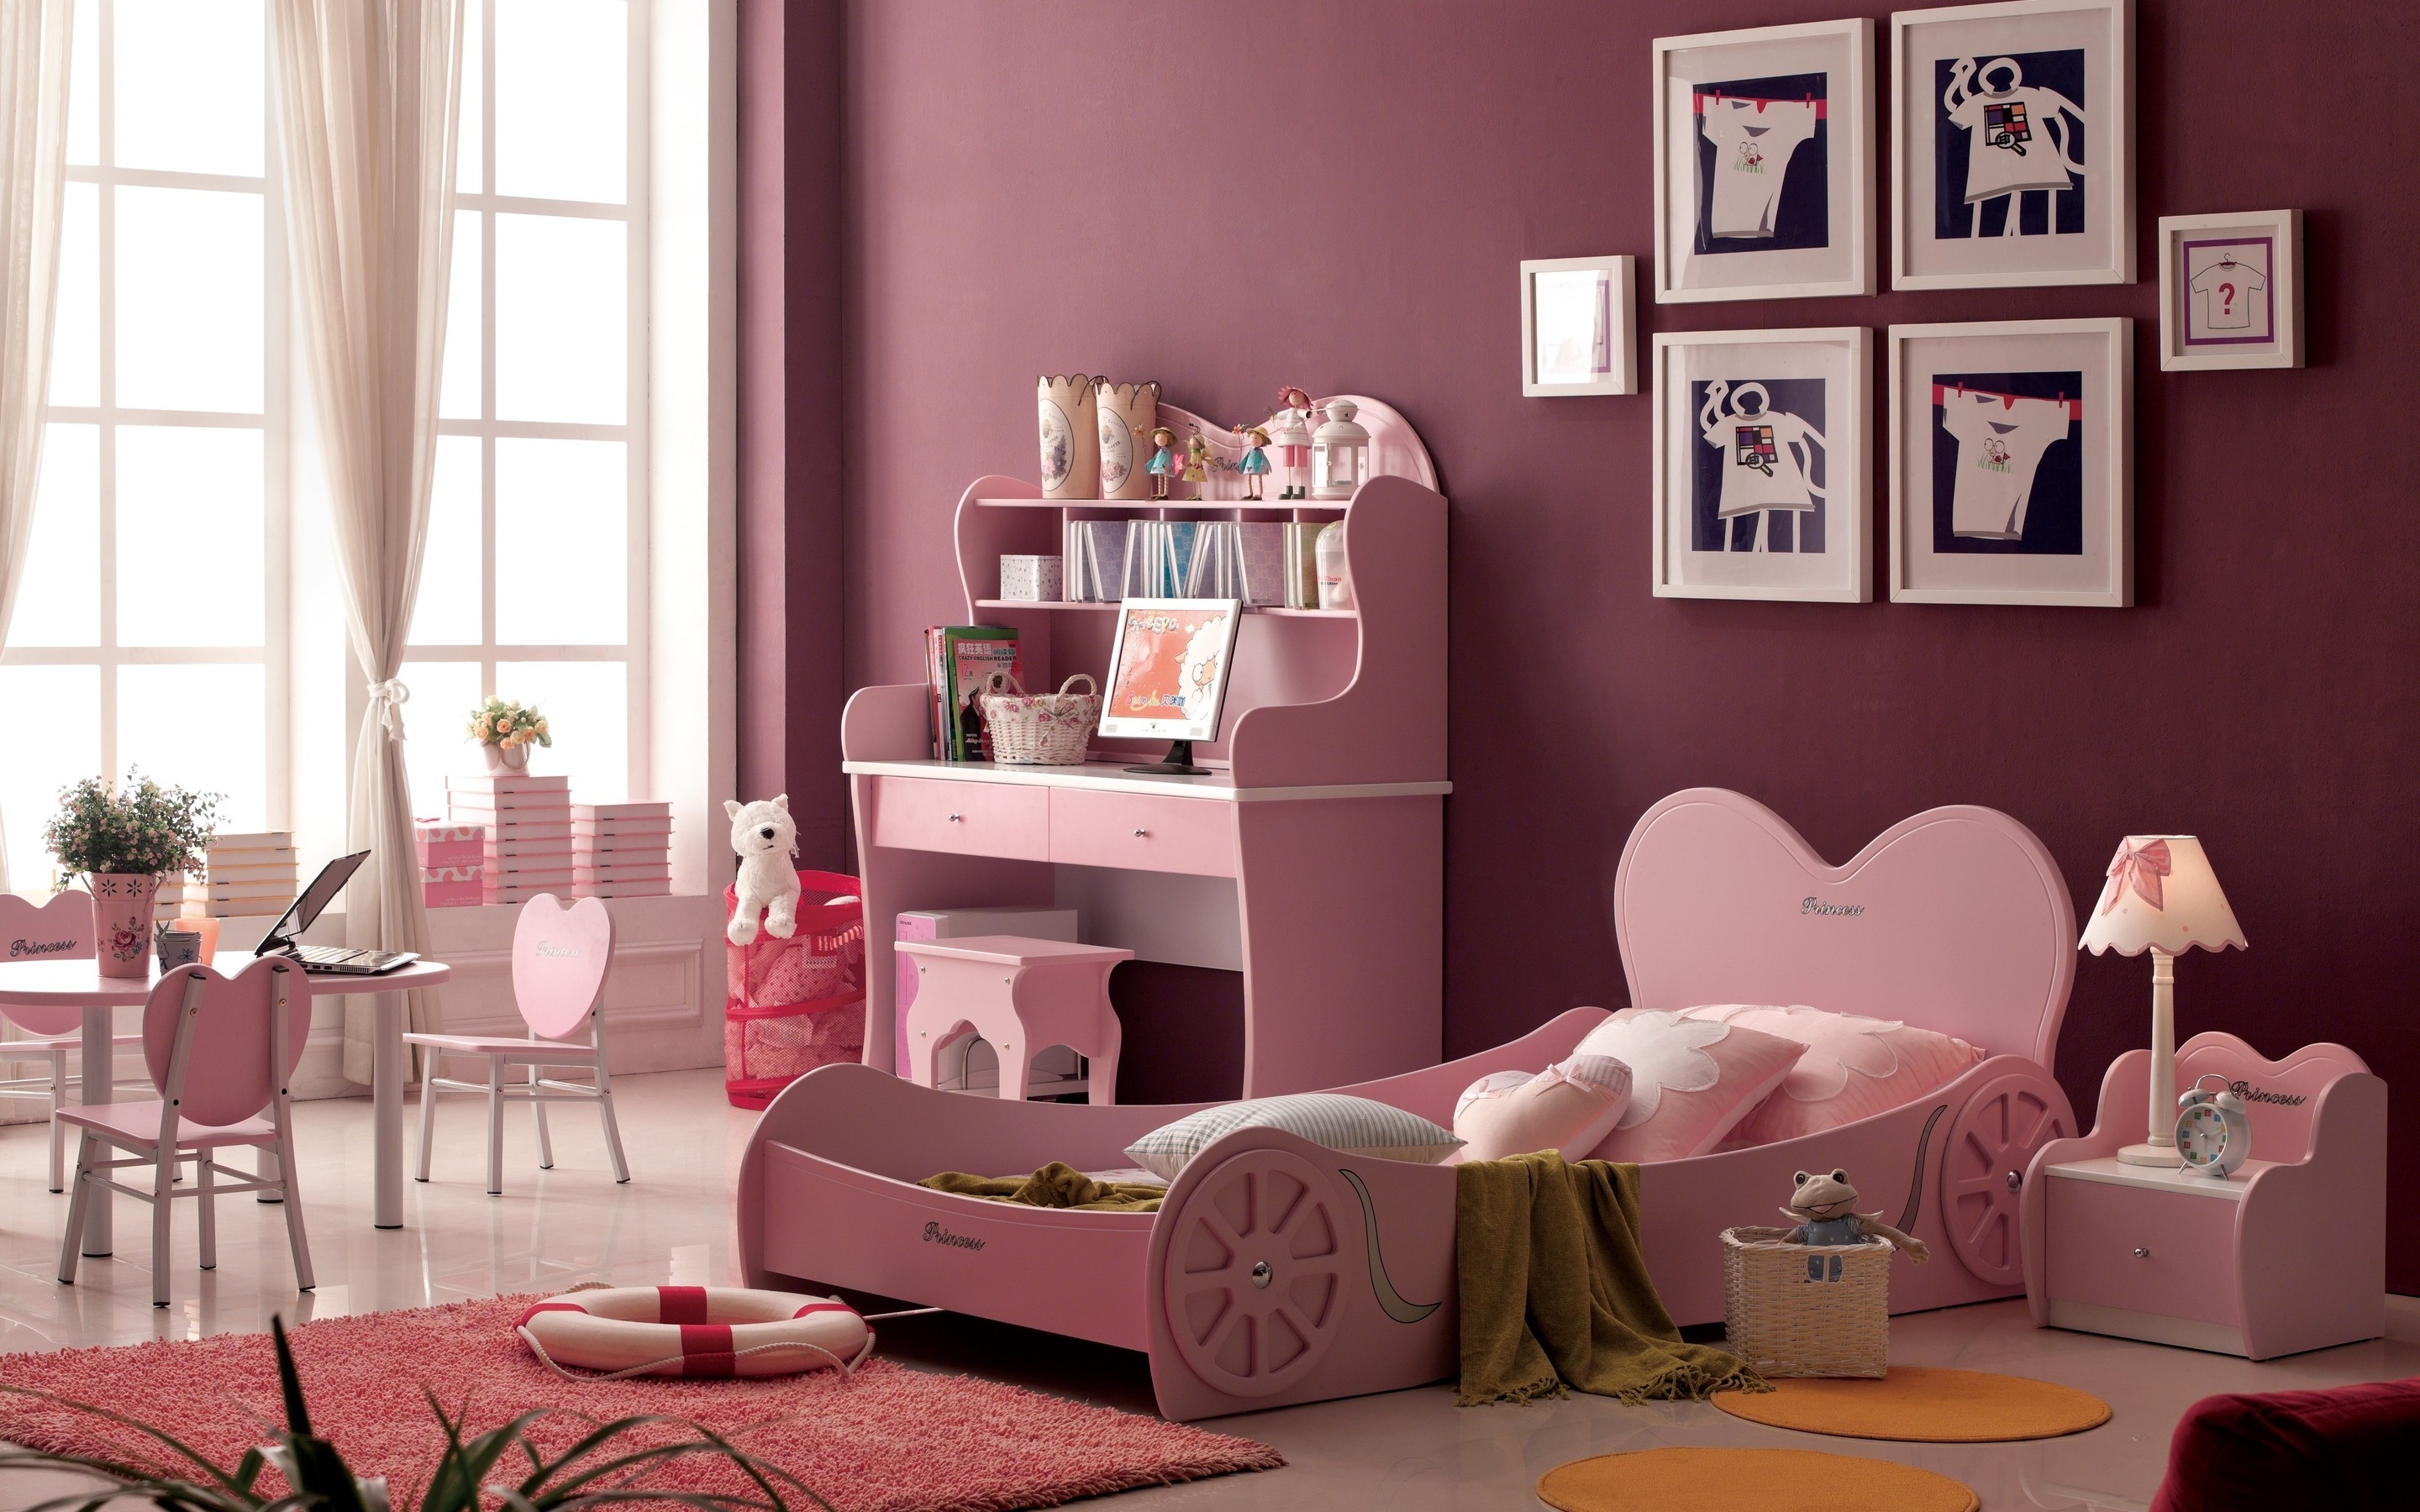 Princess Furniture for 2880 x 1800 Retina Display resolution